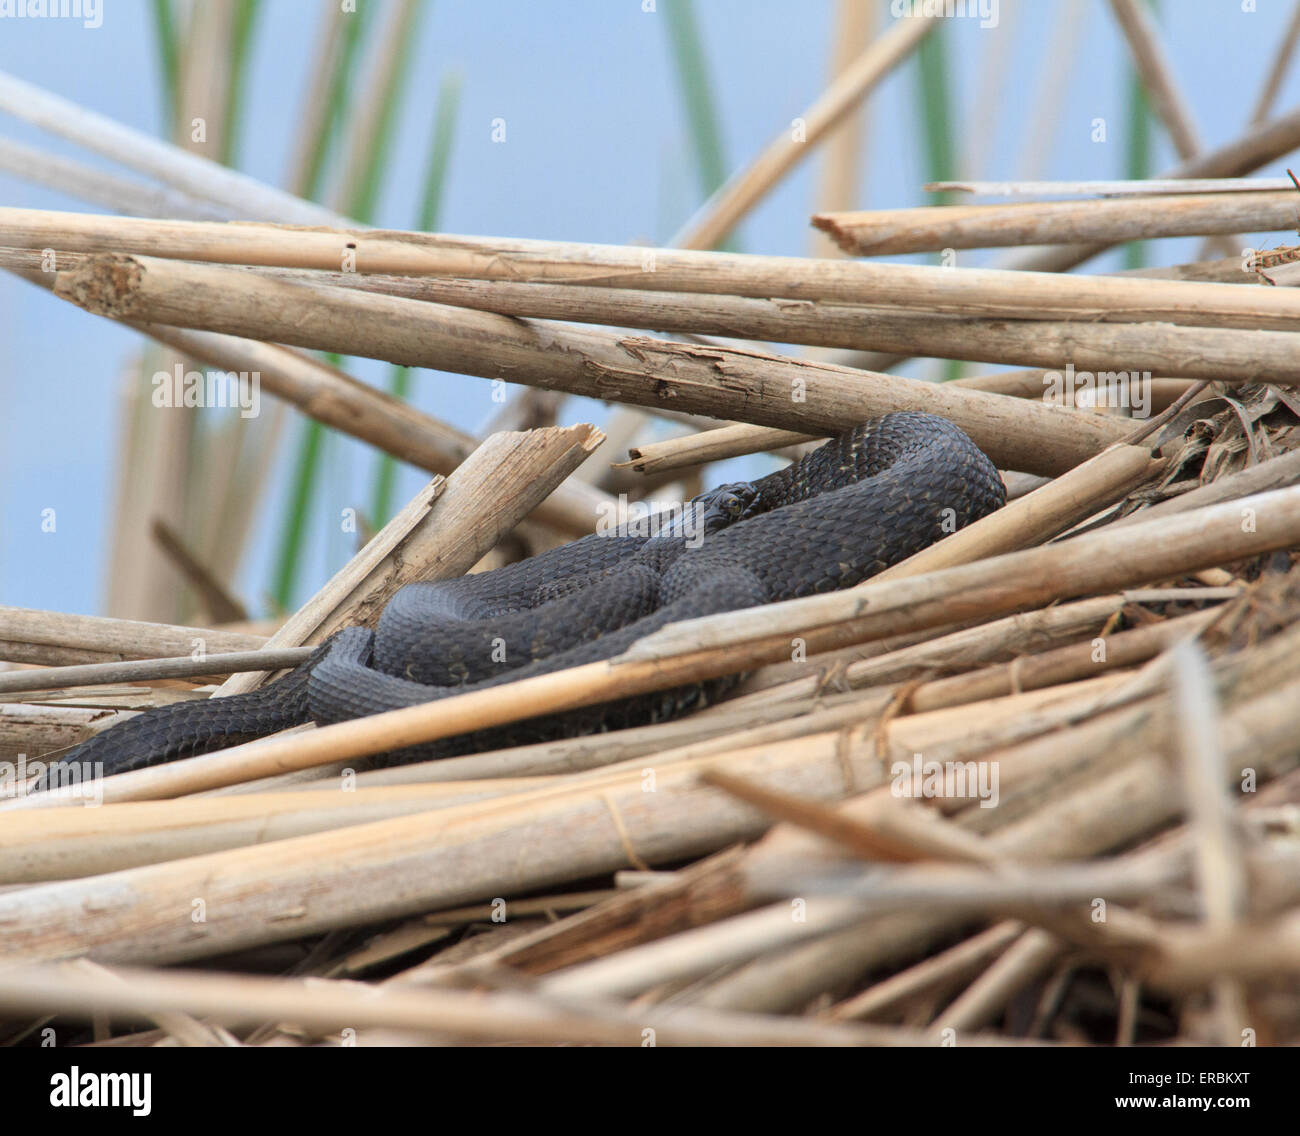 Common Watersnakes (Nerodia sipedon) Stock Photo